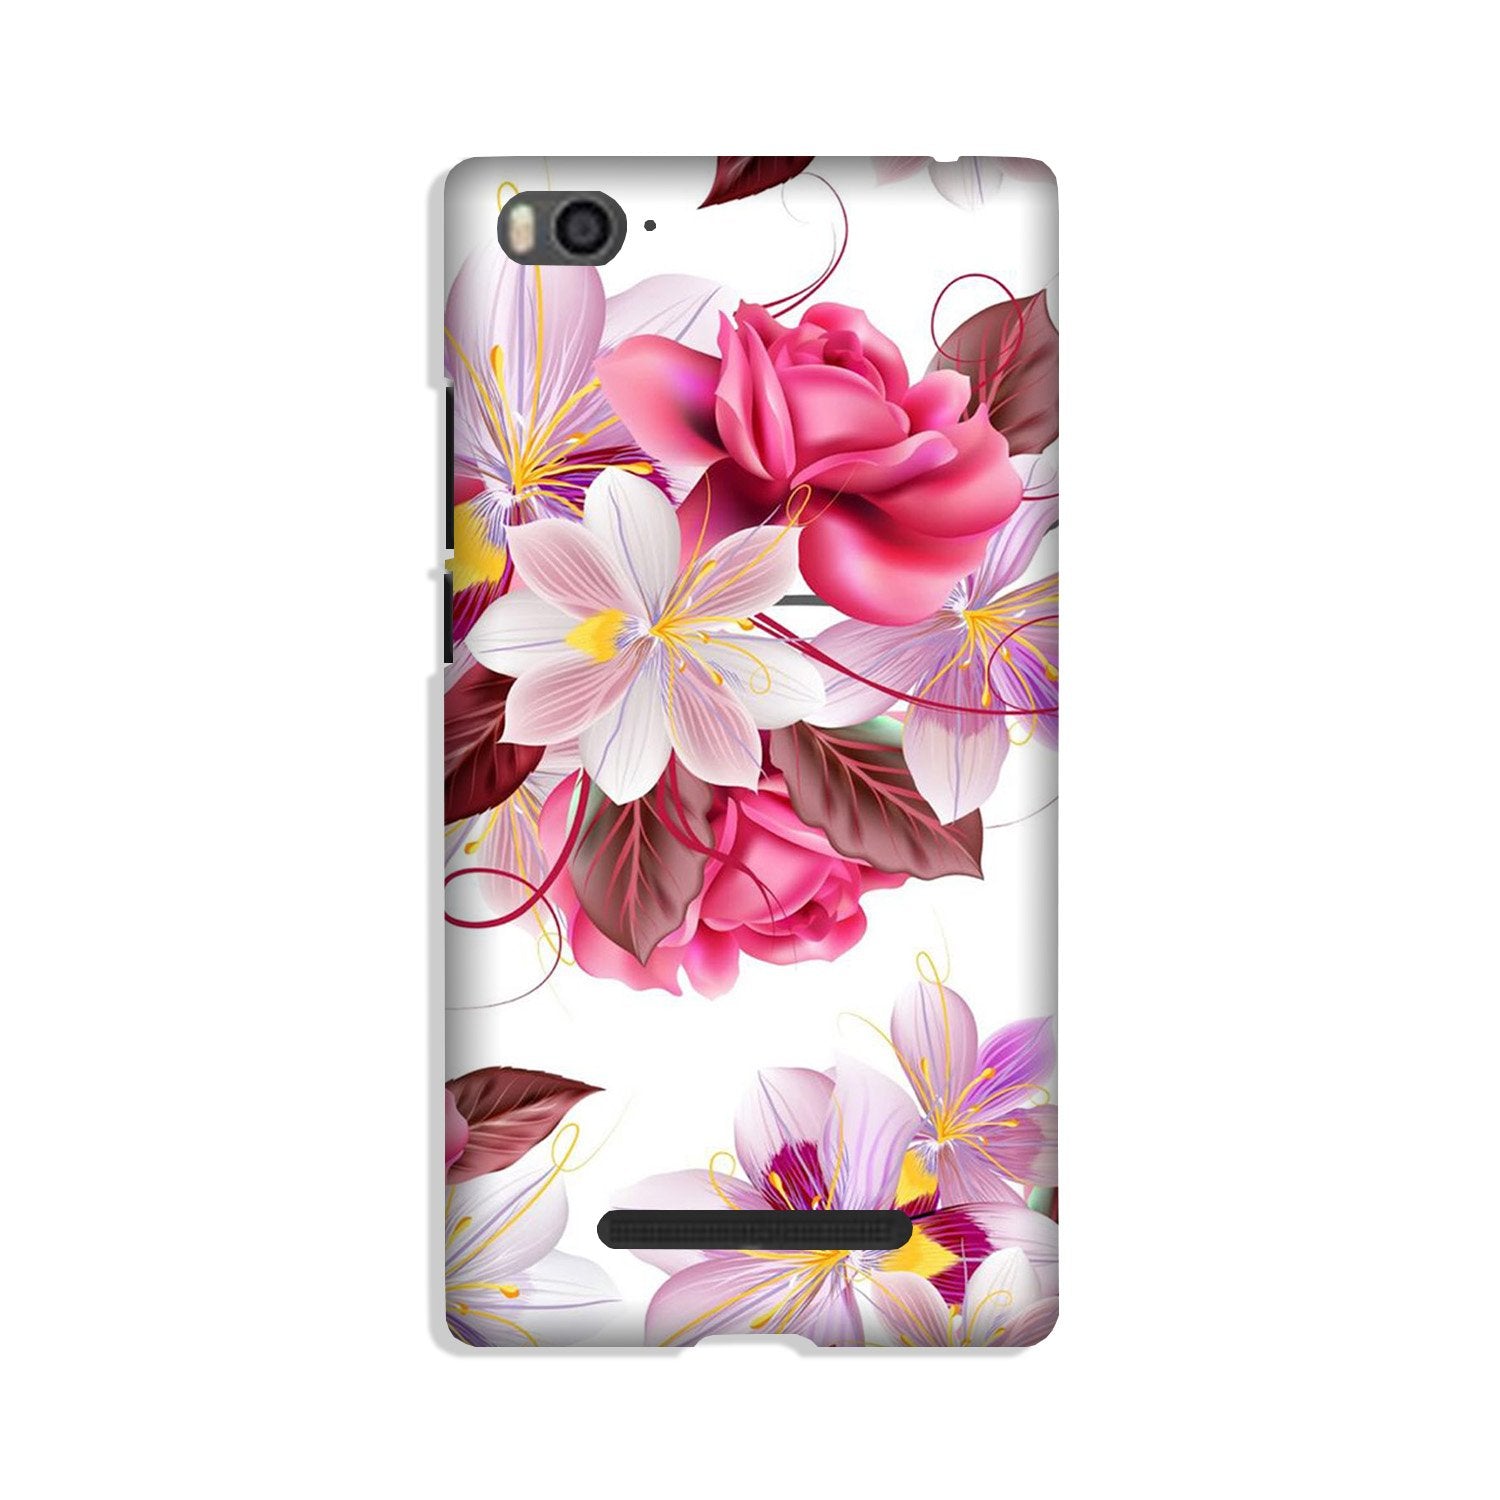 Beautiful flowers Case for Xiaomi Mi 4i